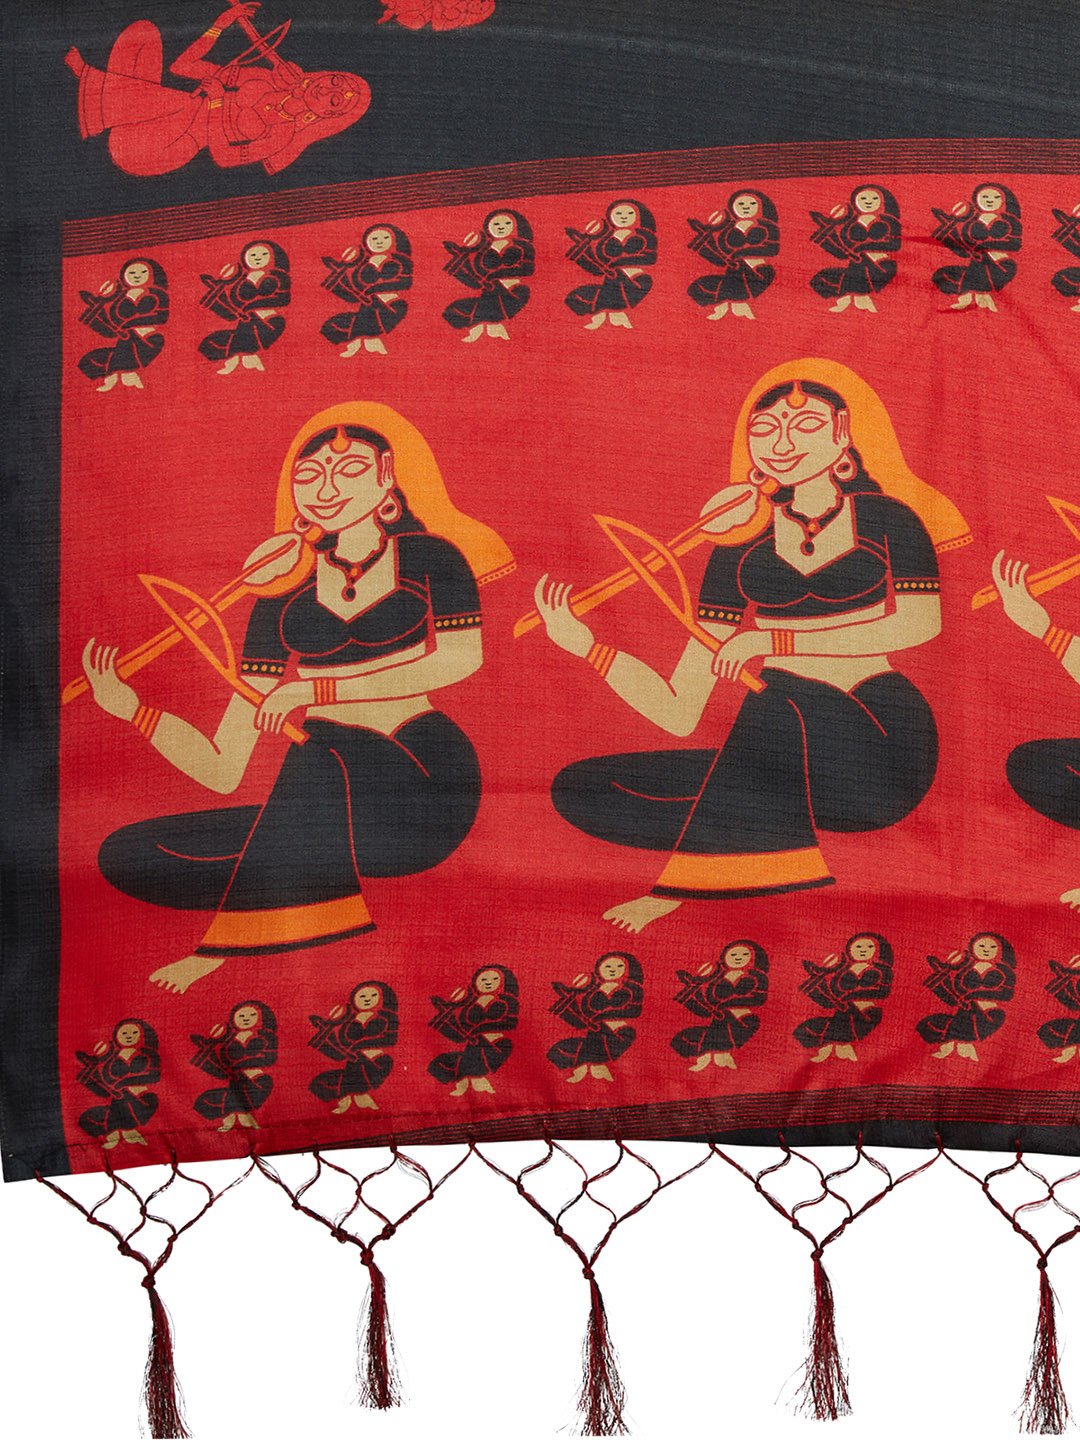 Ishin Poly Silk Black Printed Women's Saree With Tassels